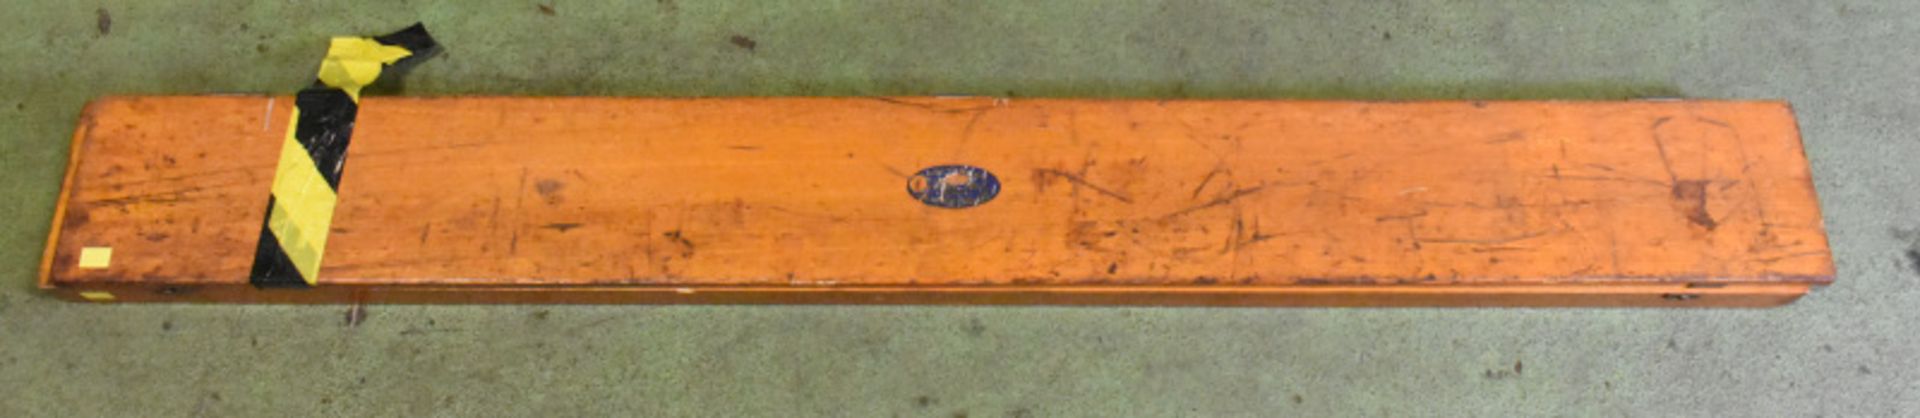 Chesterman large vernier caliper - imperial - Image 4 of 4